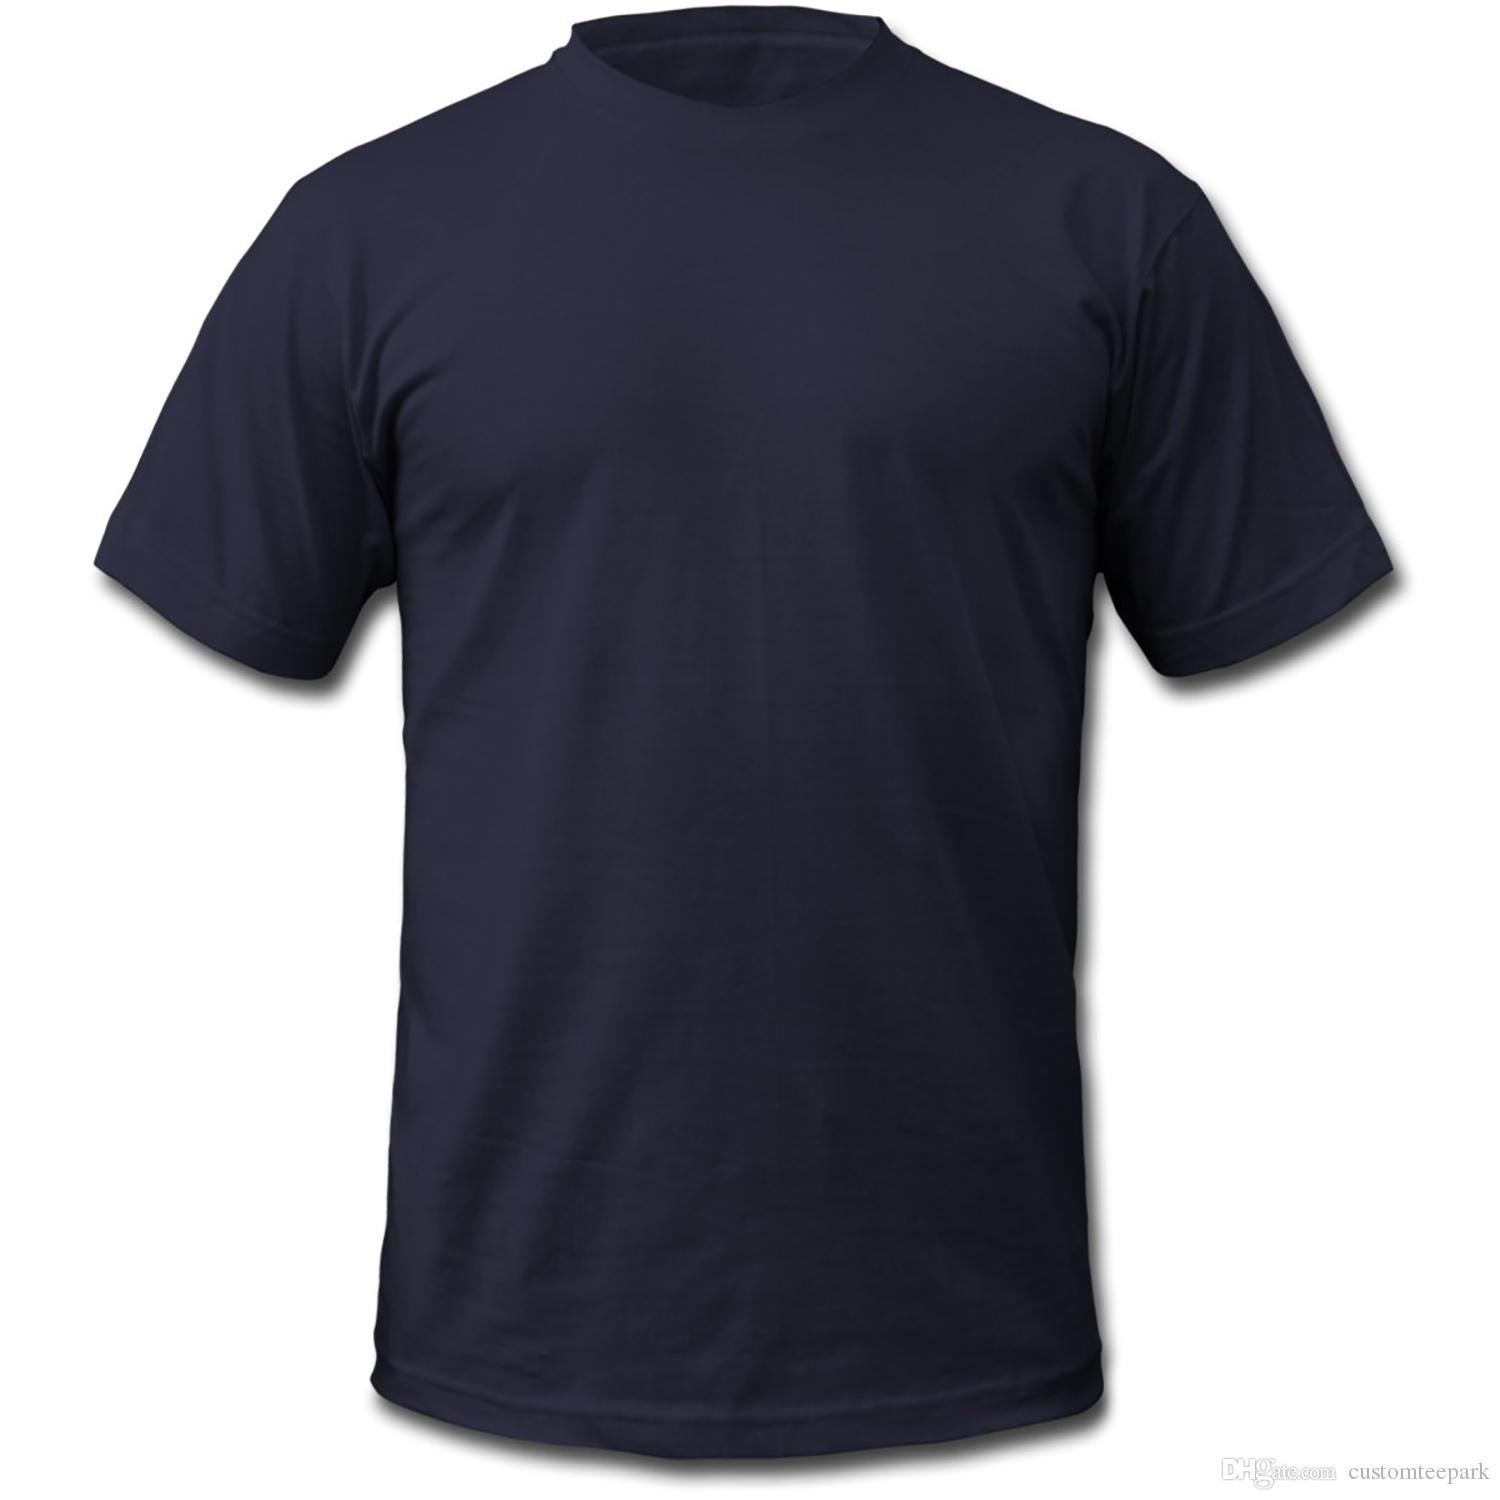 Polo T Shirt Mens Design - HD Wallpaper 